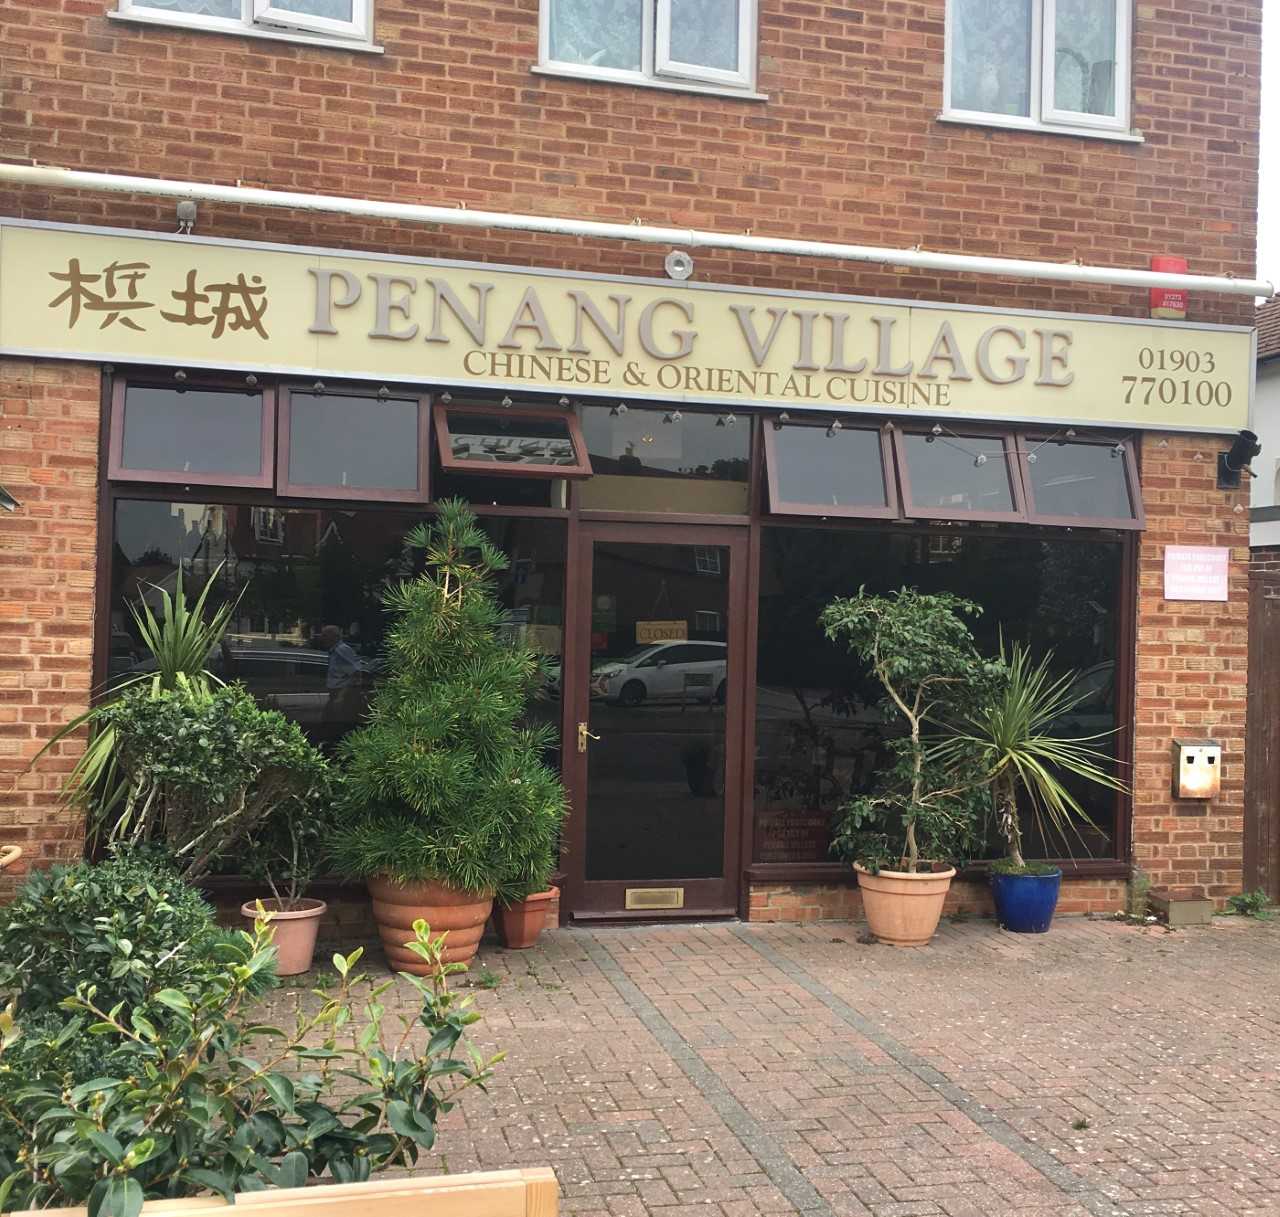 Penang Village in East Preston